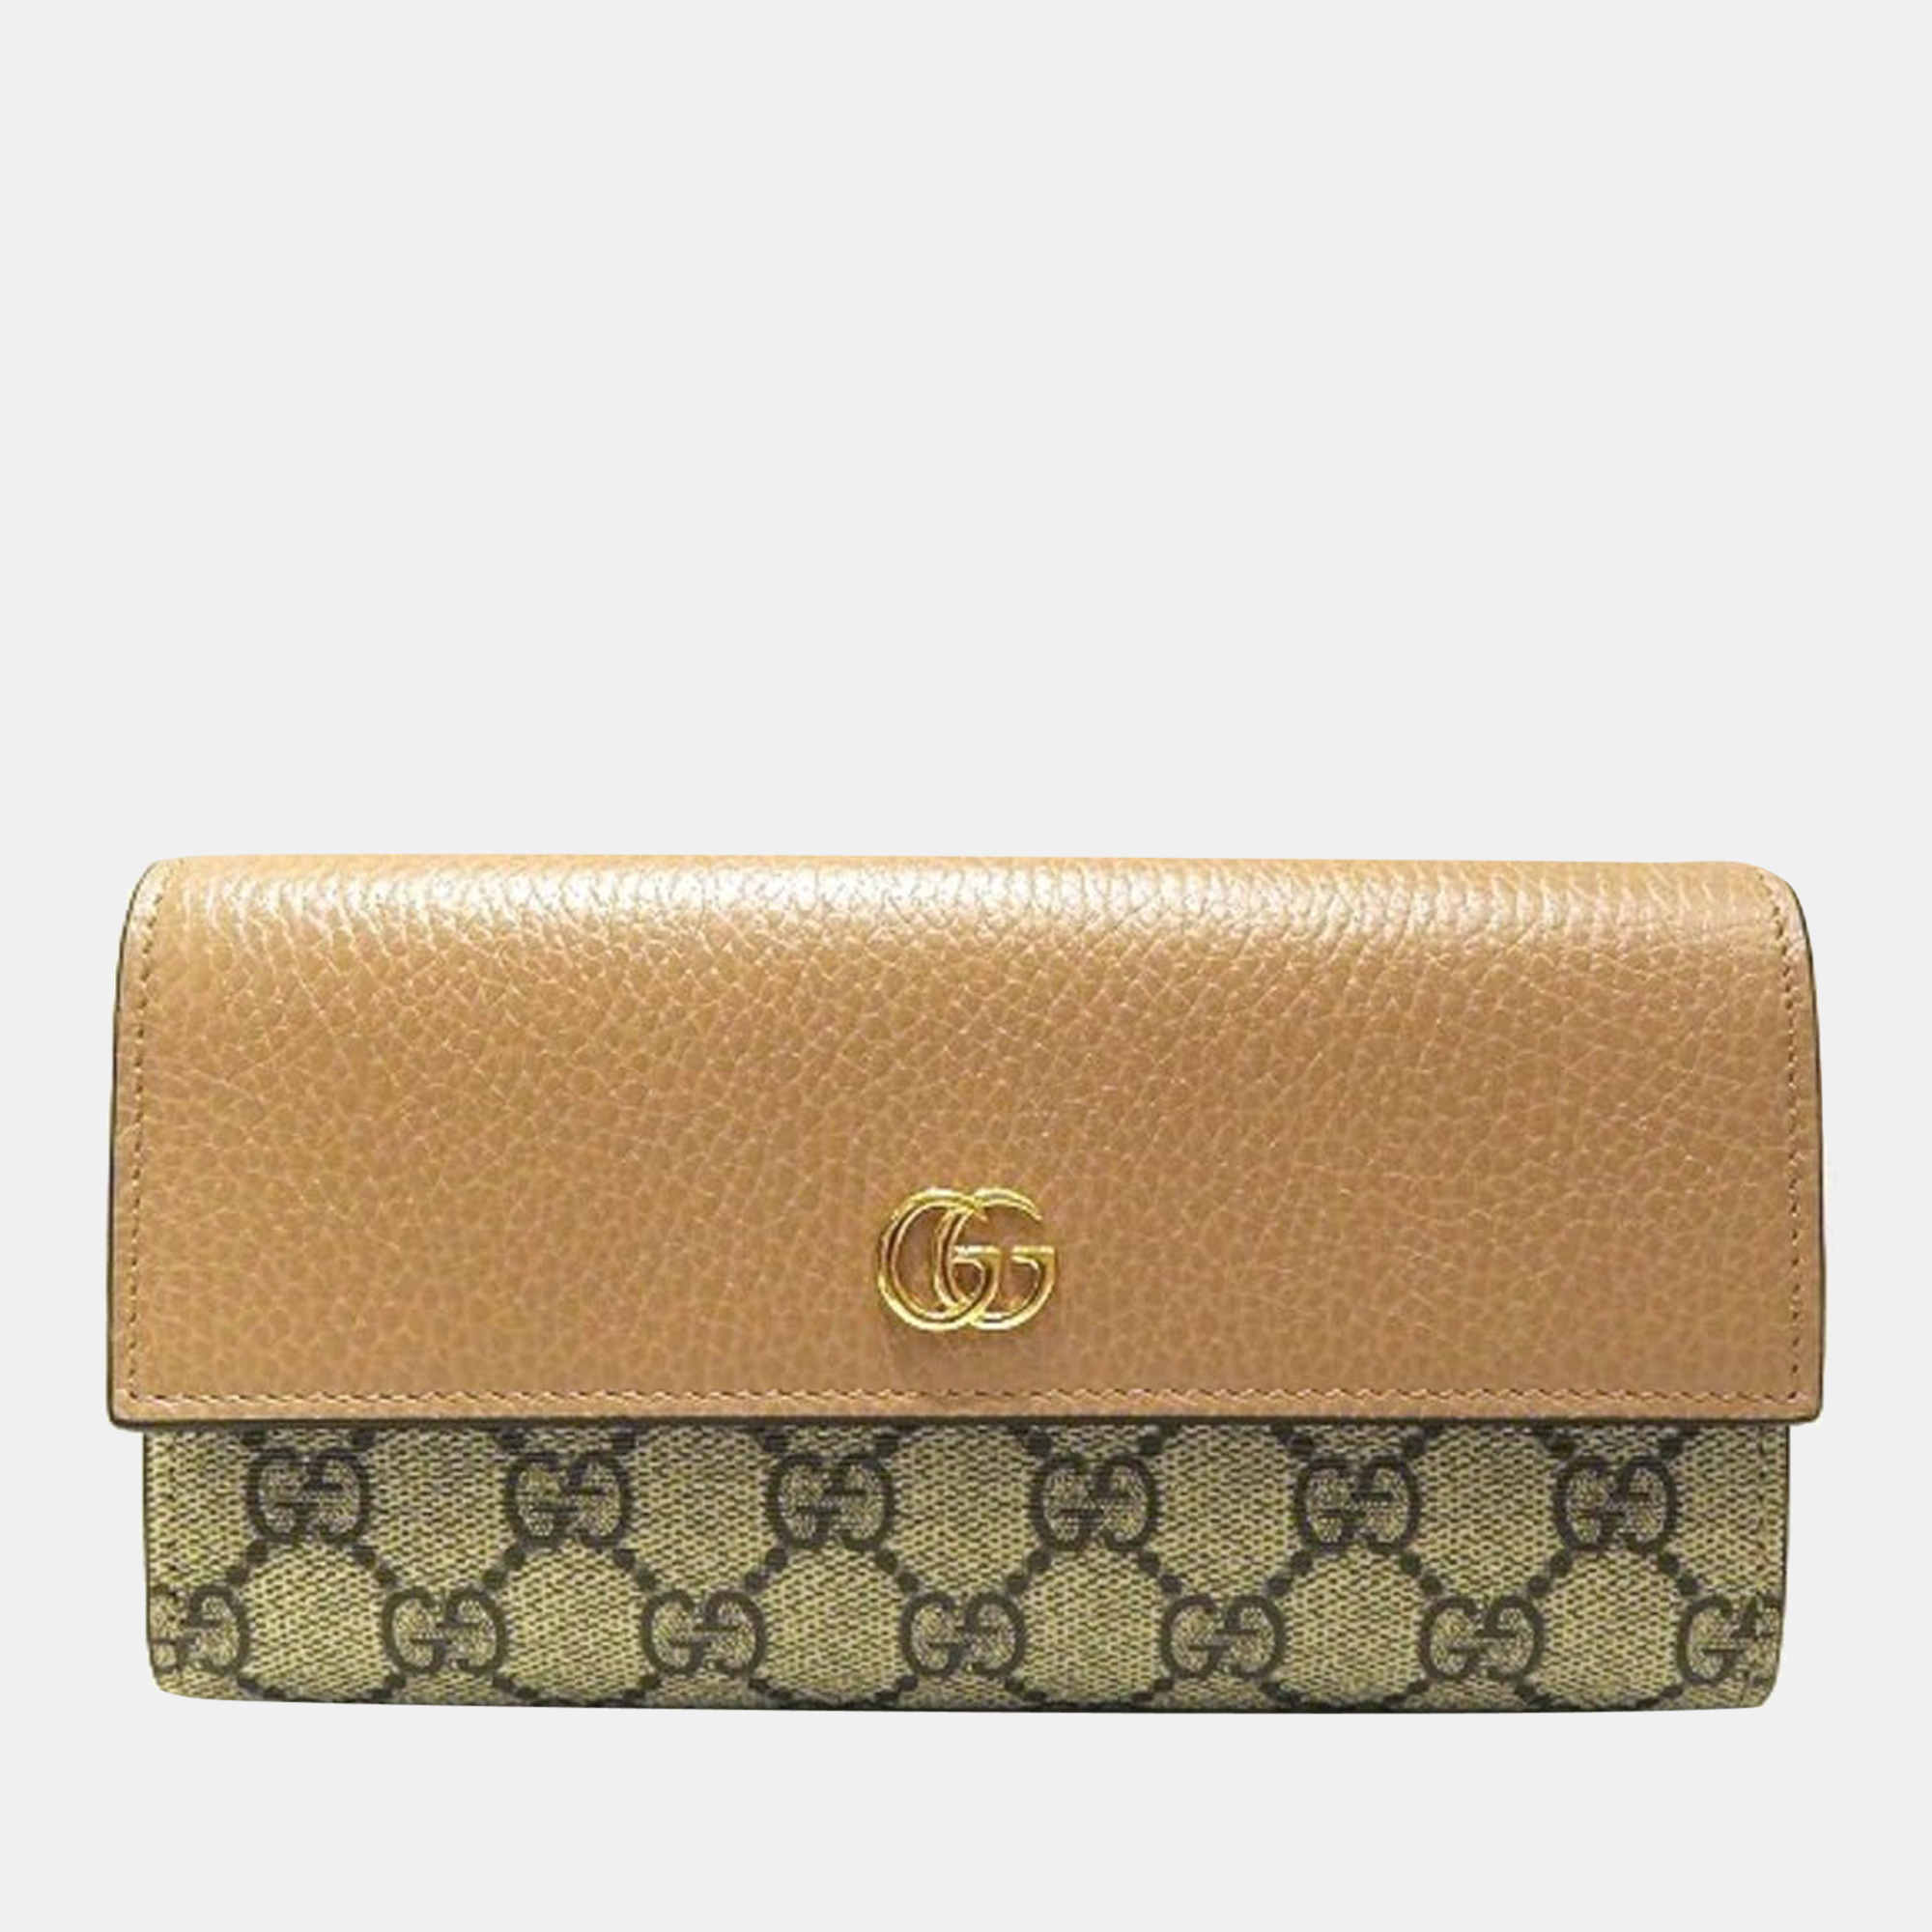 Gucci Black Canvas GG Marmont GG Supreme Continental Wallet